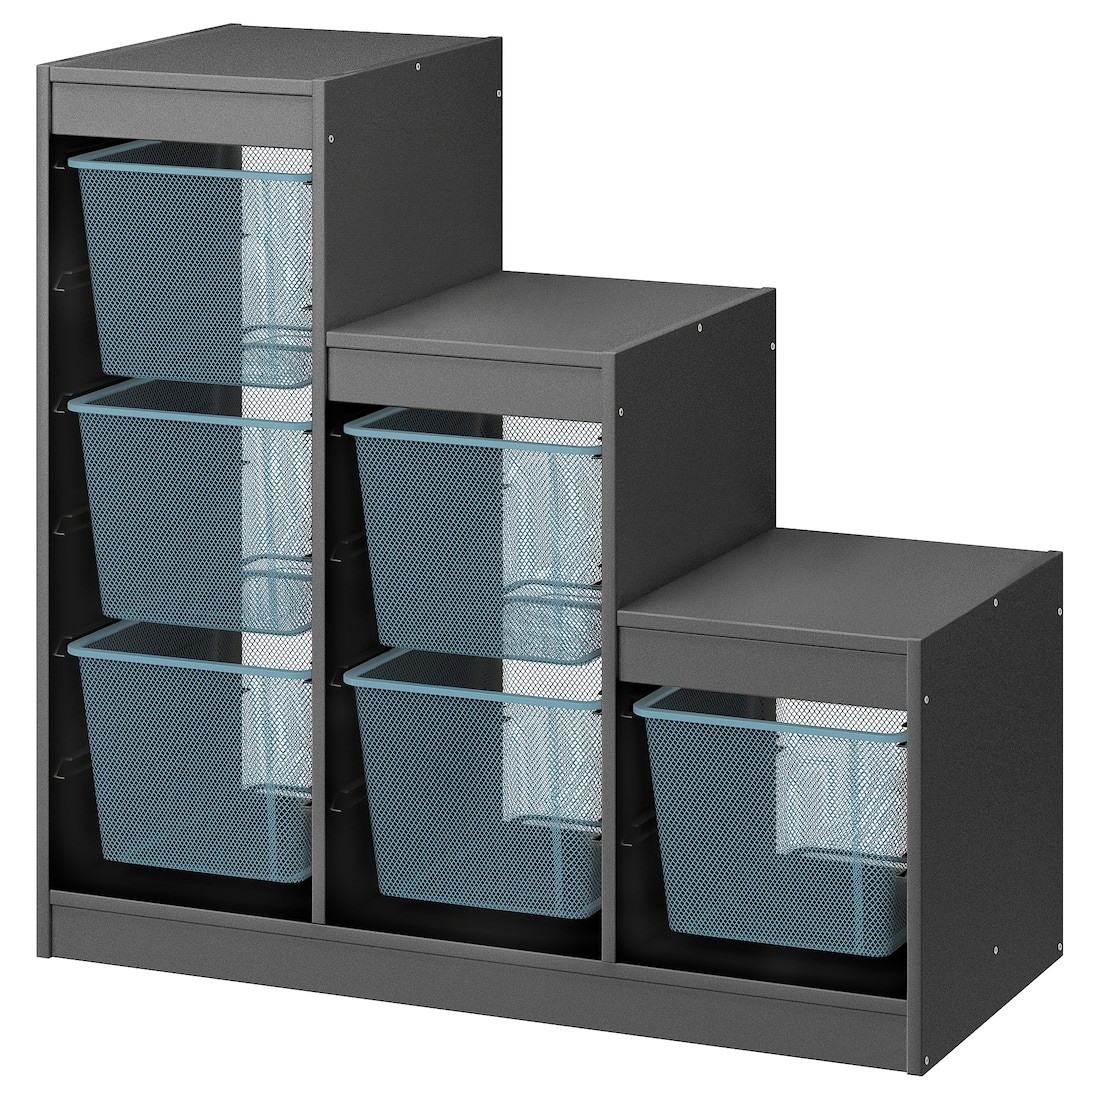 TROFAST Комбинация для хранения + контейнеры, серый / серо-синий, 99x44x94 см